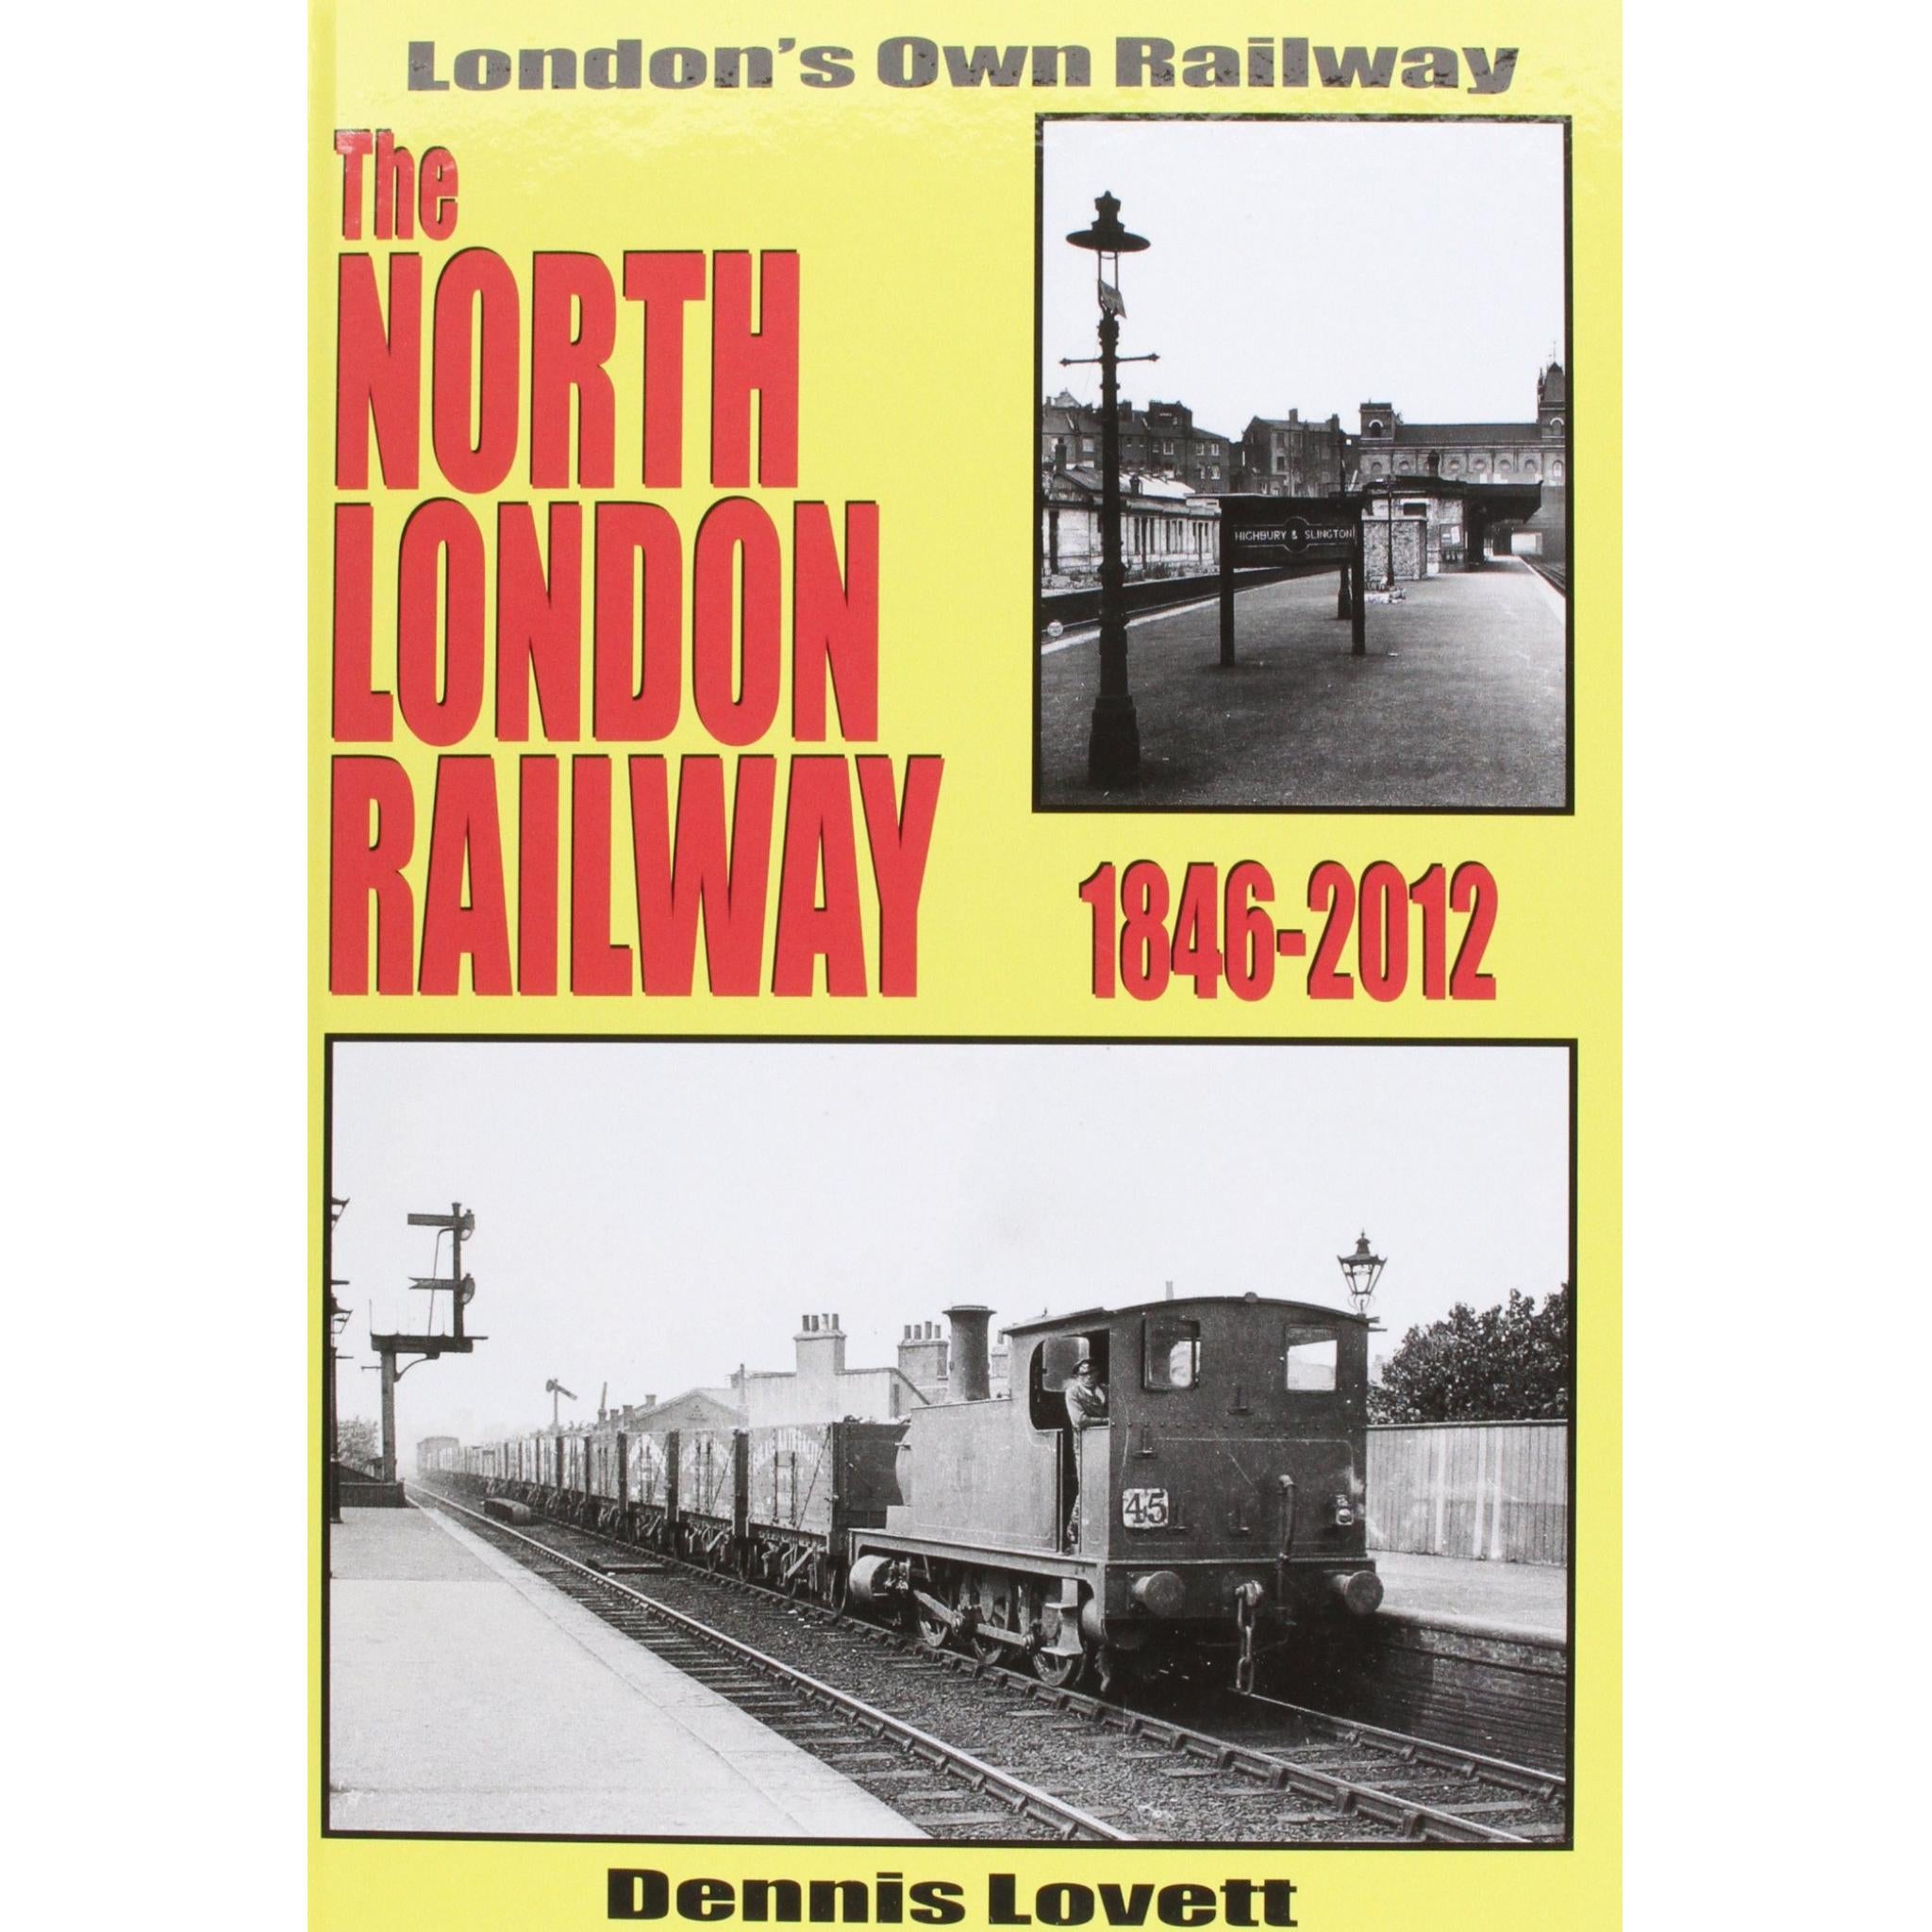 The NORTH LONDON RAILWAY 1846-2012